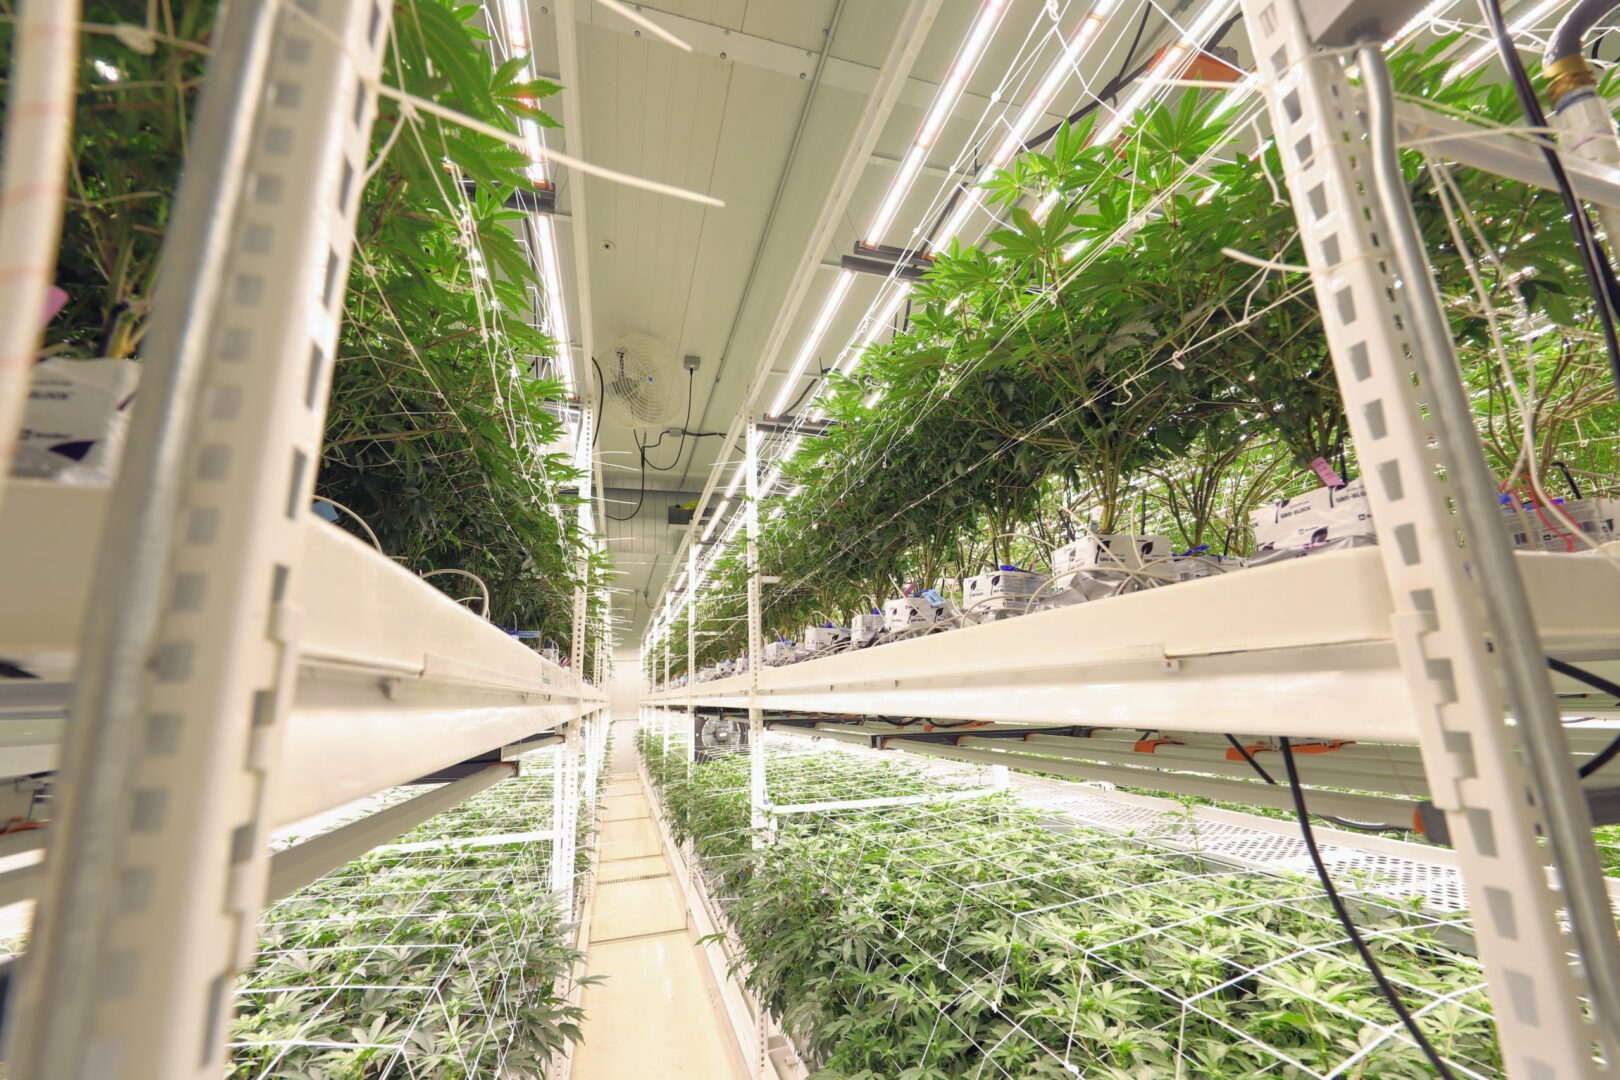 Cannabis Grow Trays: Designed For Maximum Performance